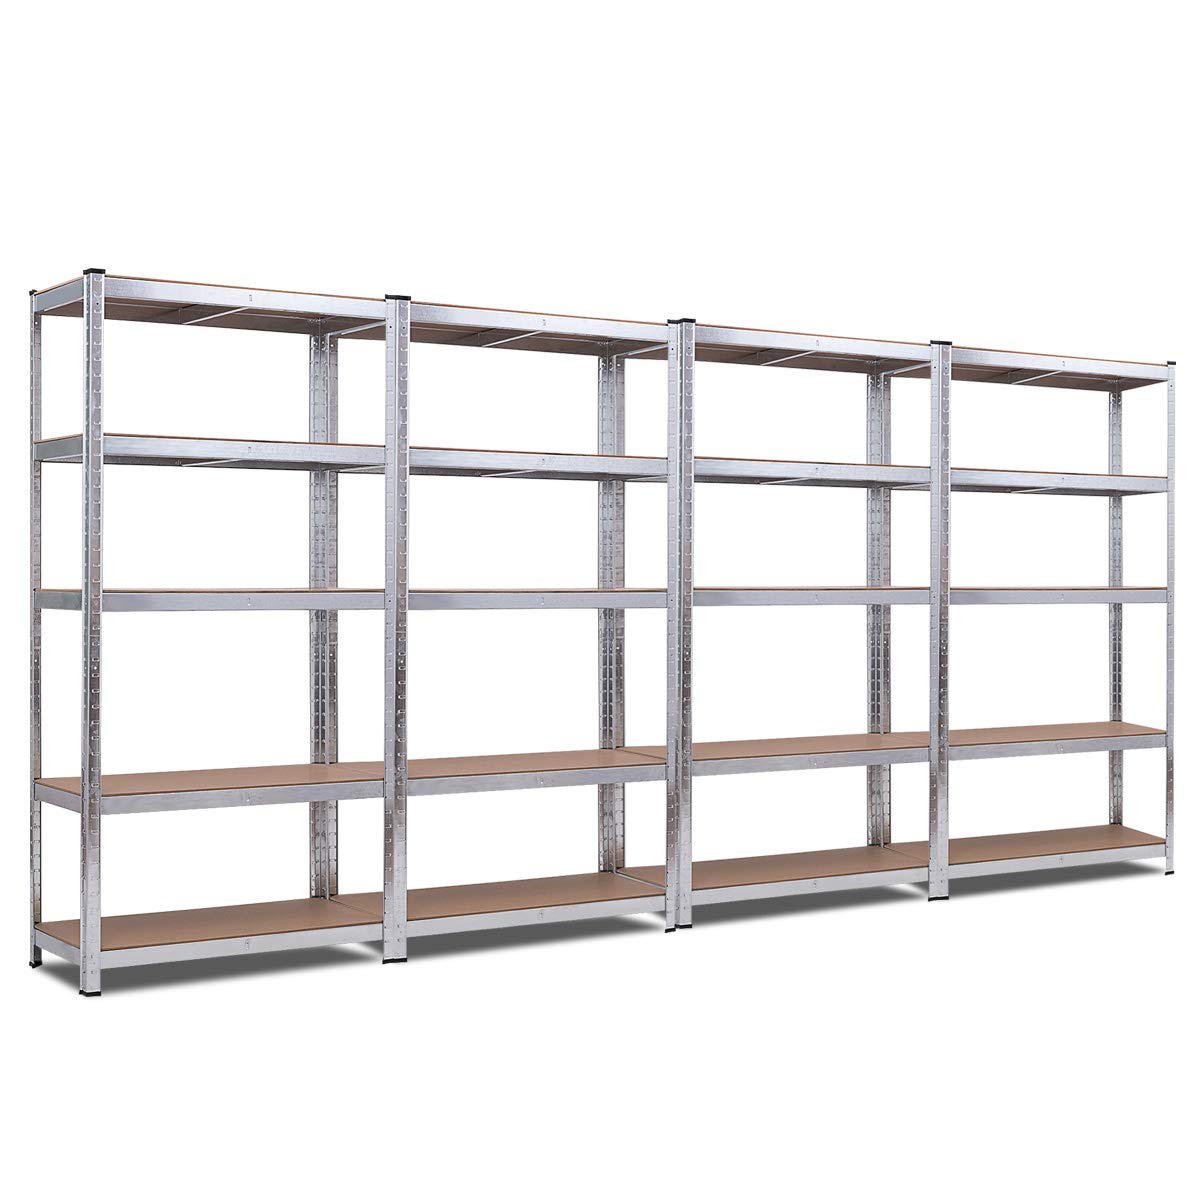 2 Pcs 5-Tier Storage Shelves, Garage Shelving Units